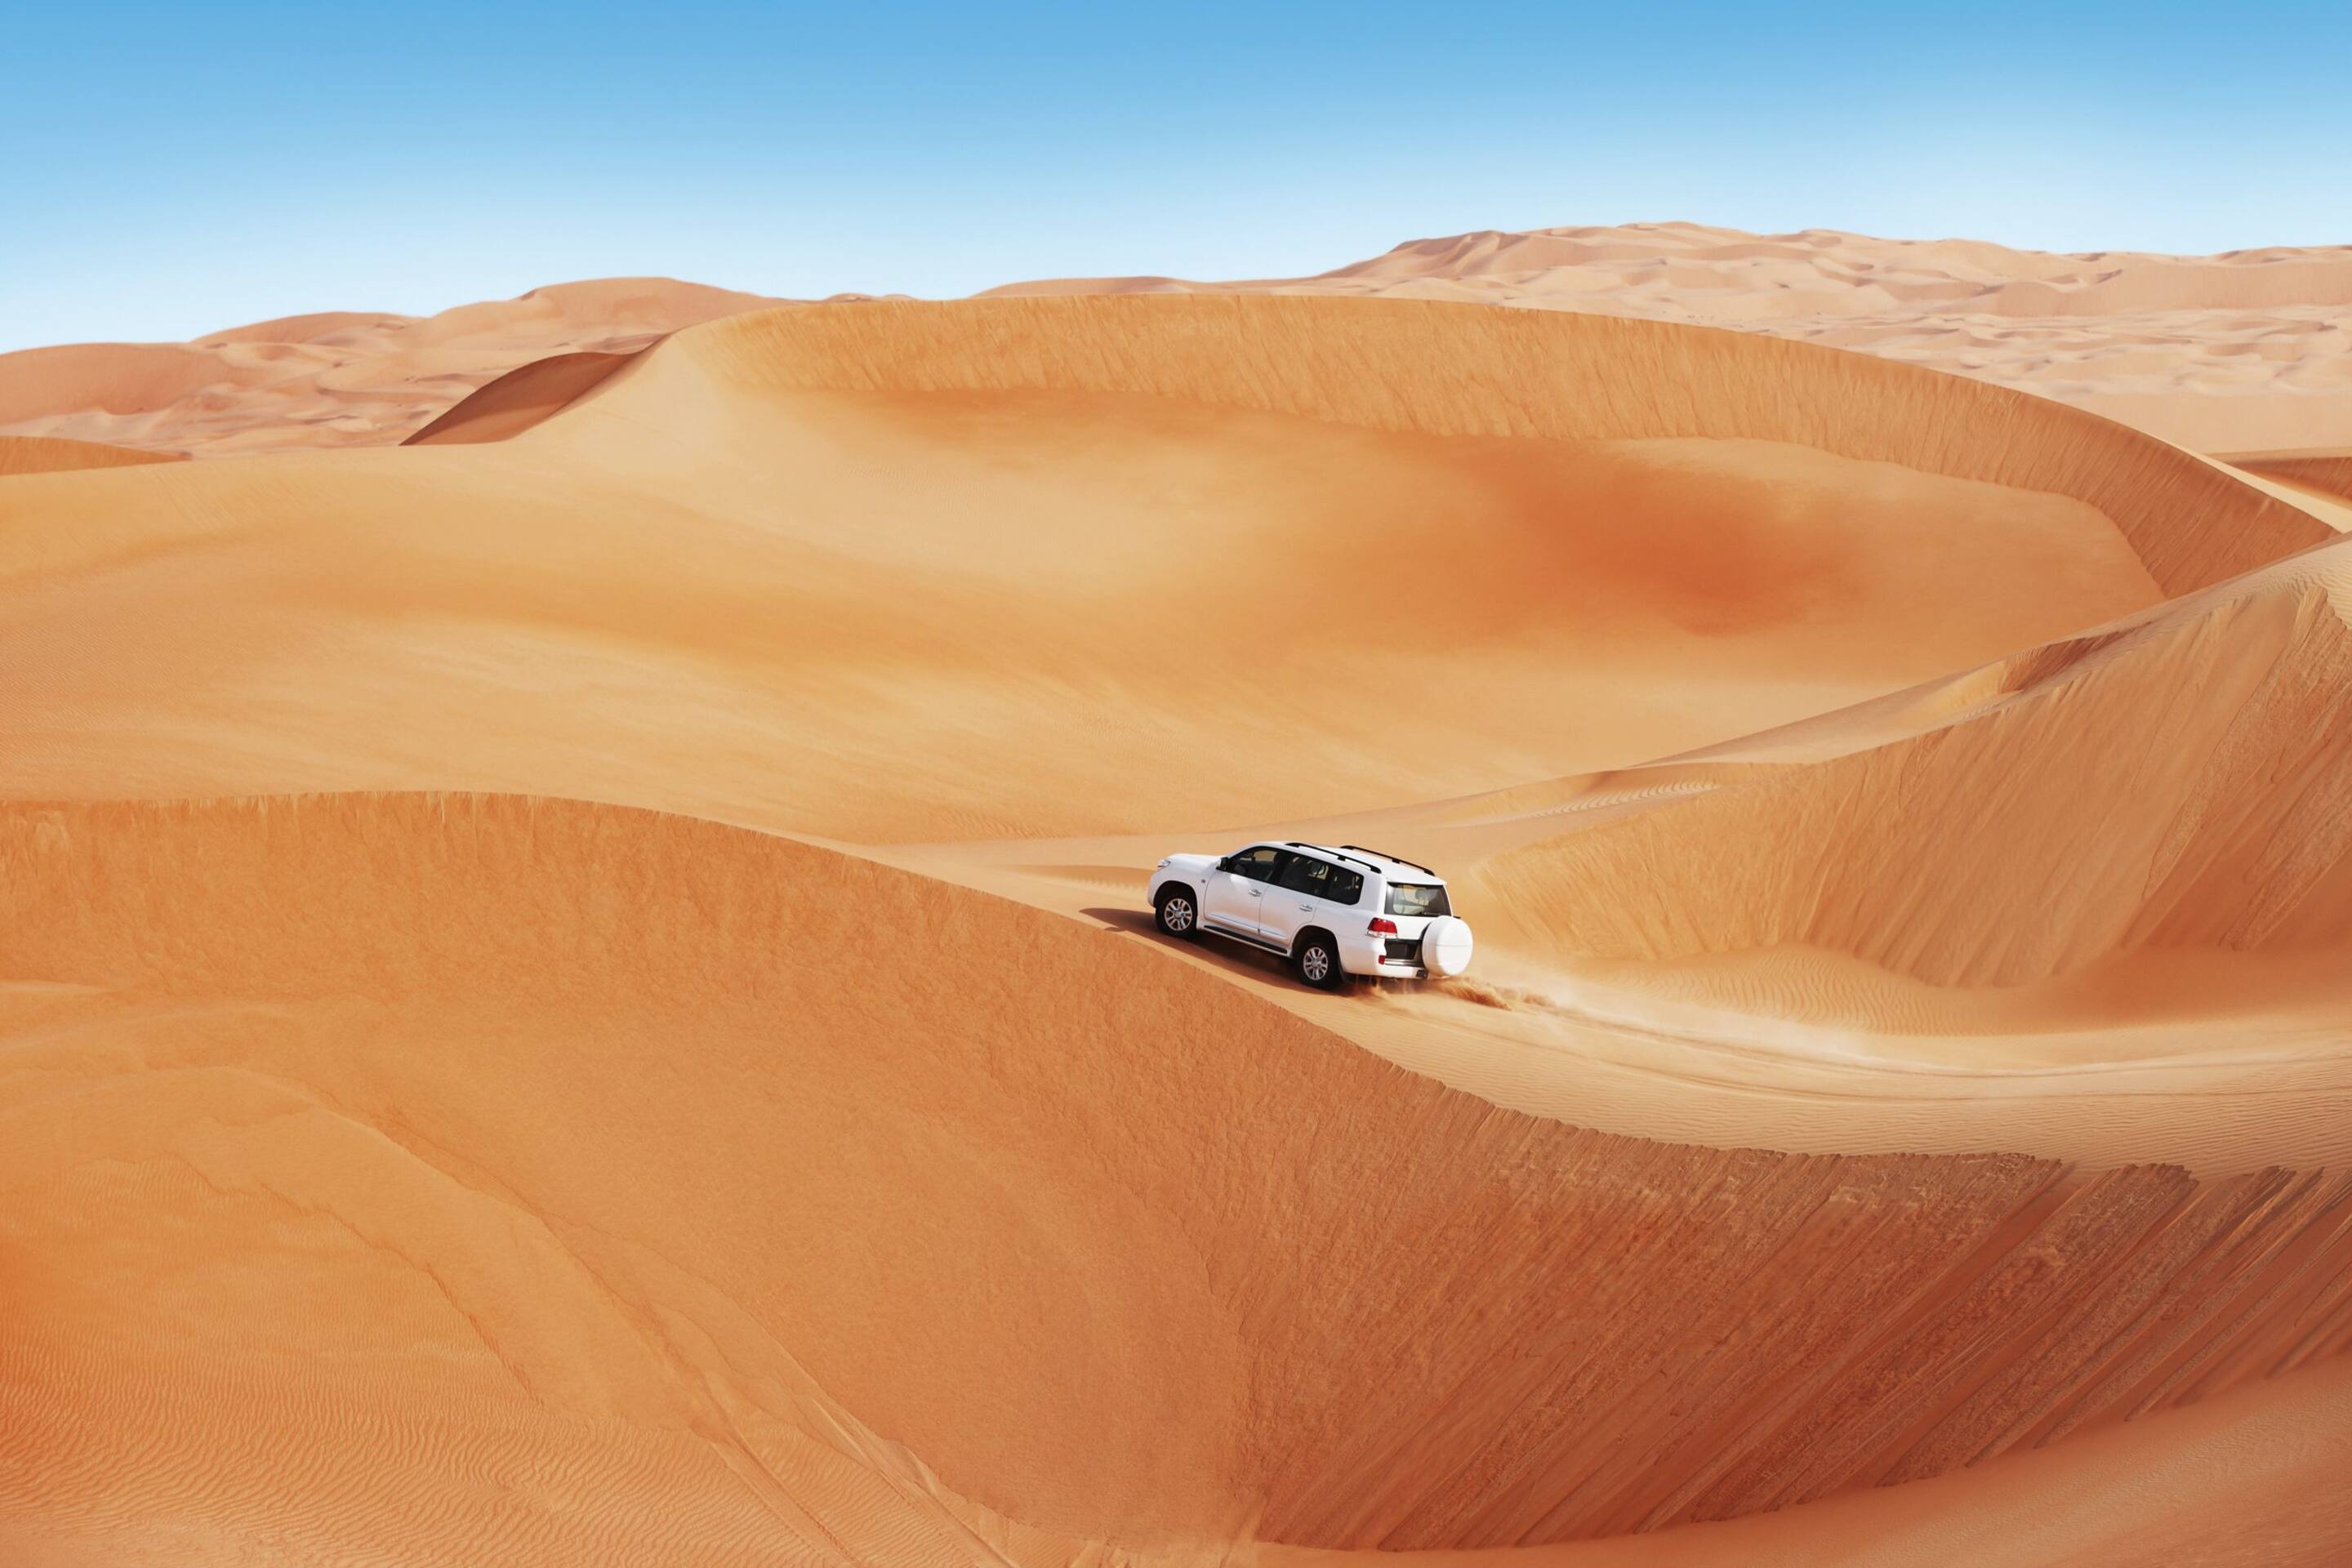 Dubai sand dune with car driving across